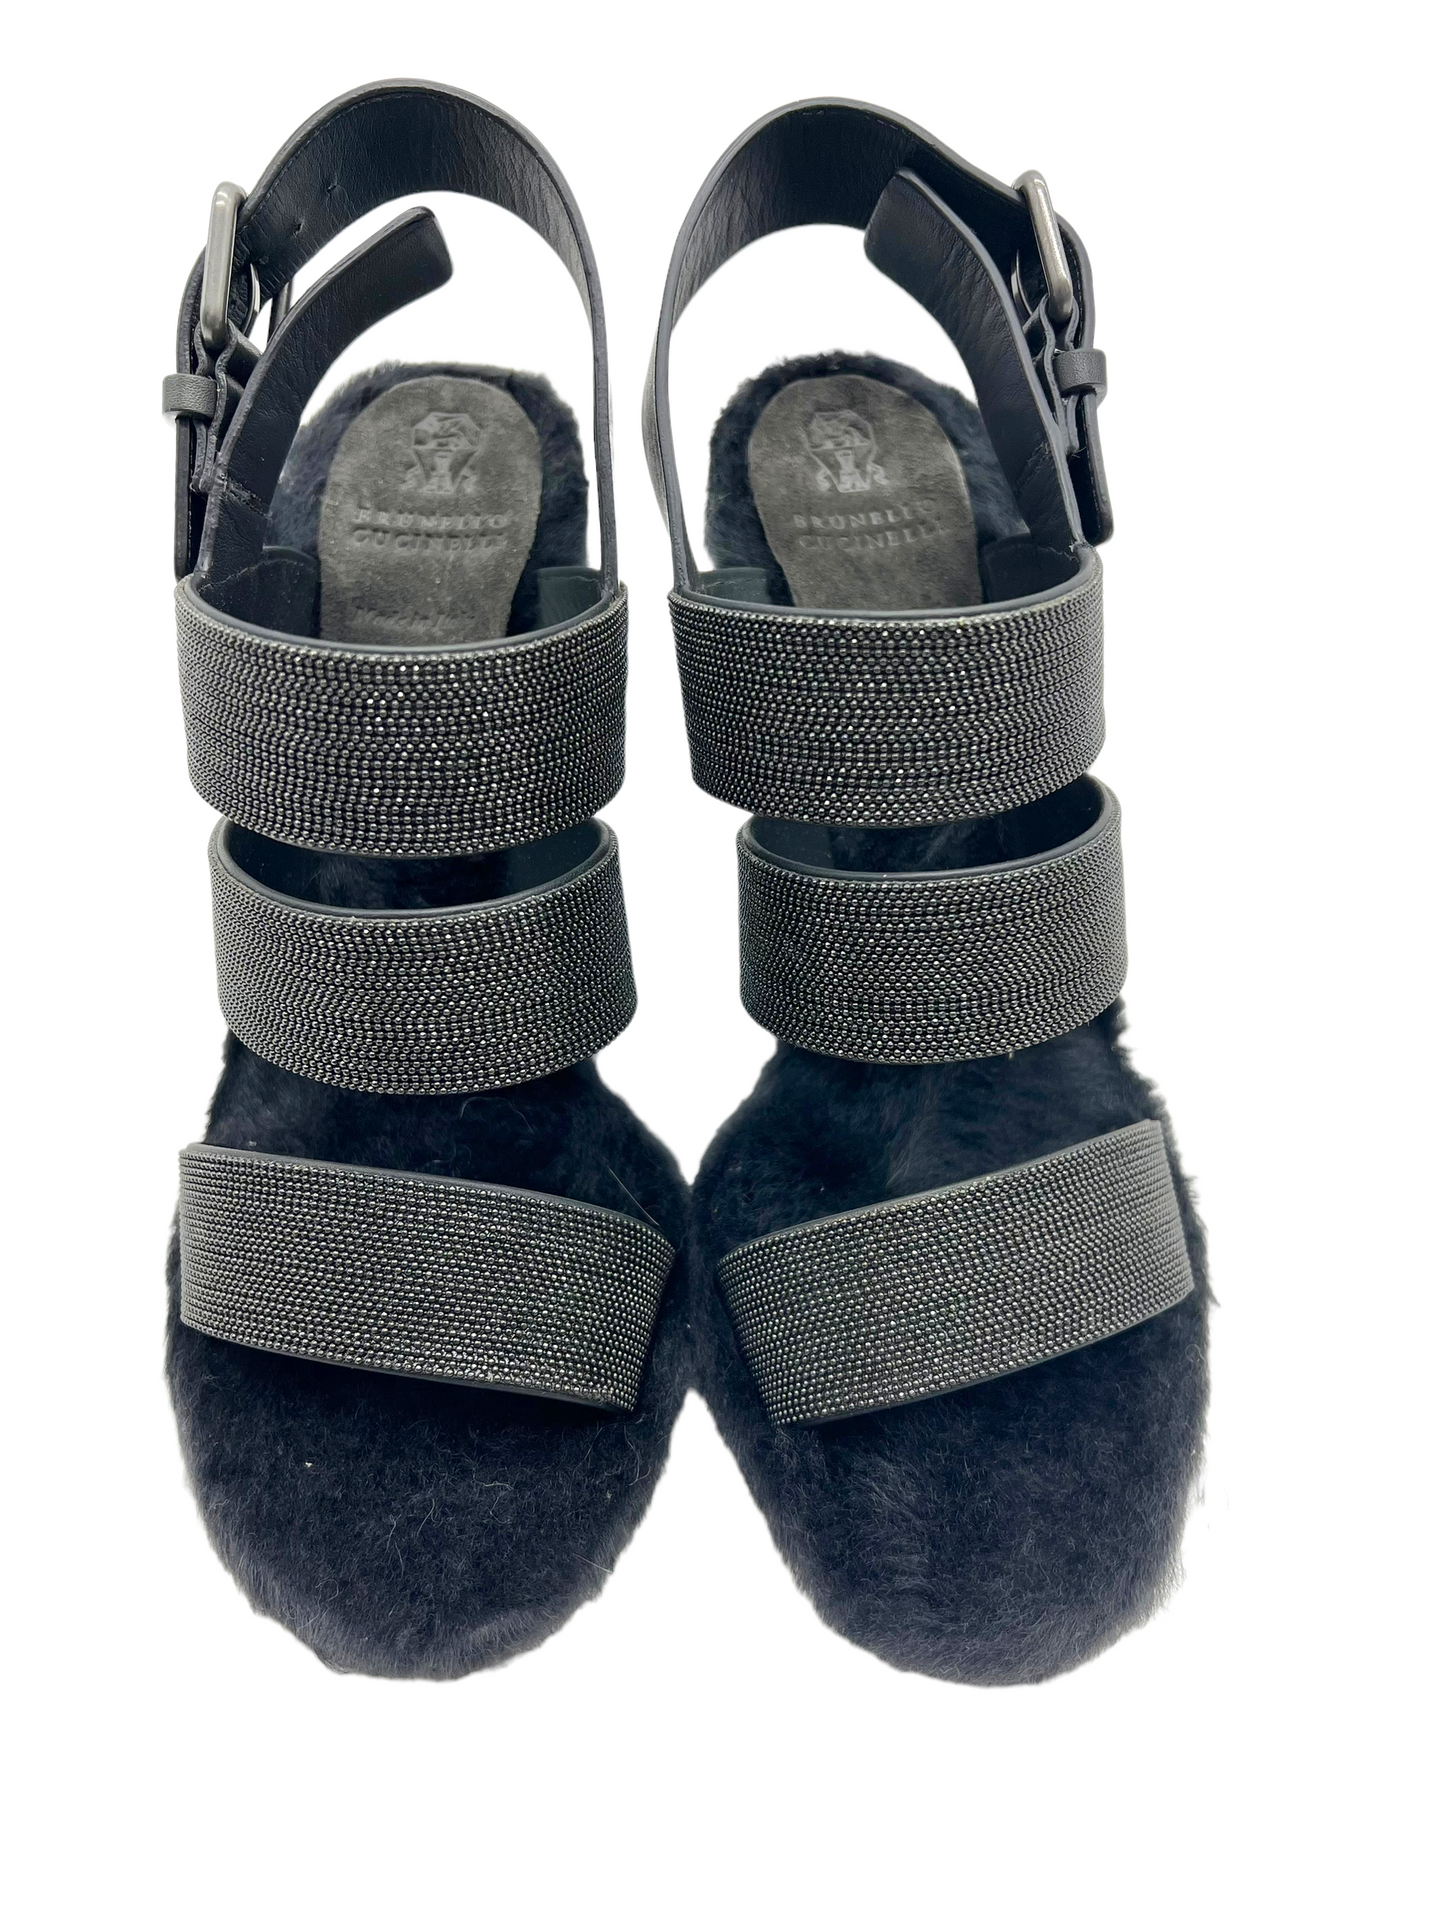 Brunello Cucinelli Black Beaded Fur Lined Size 37 Heels